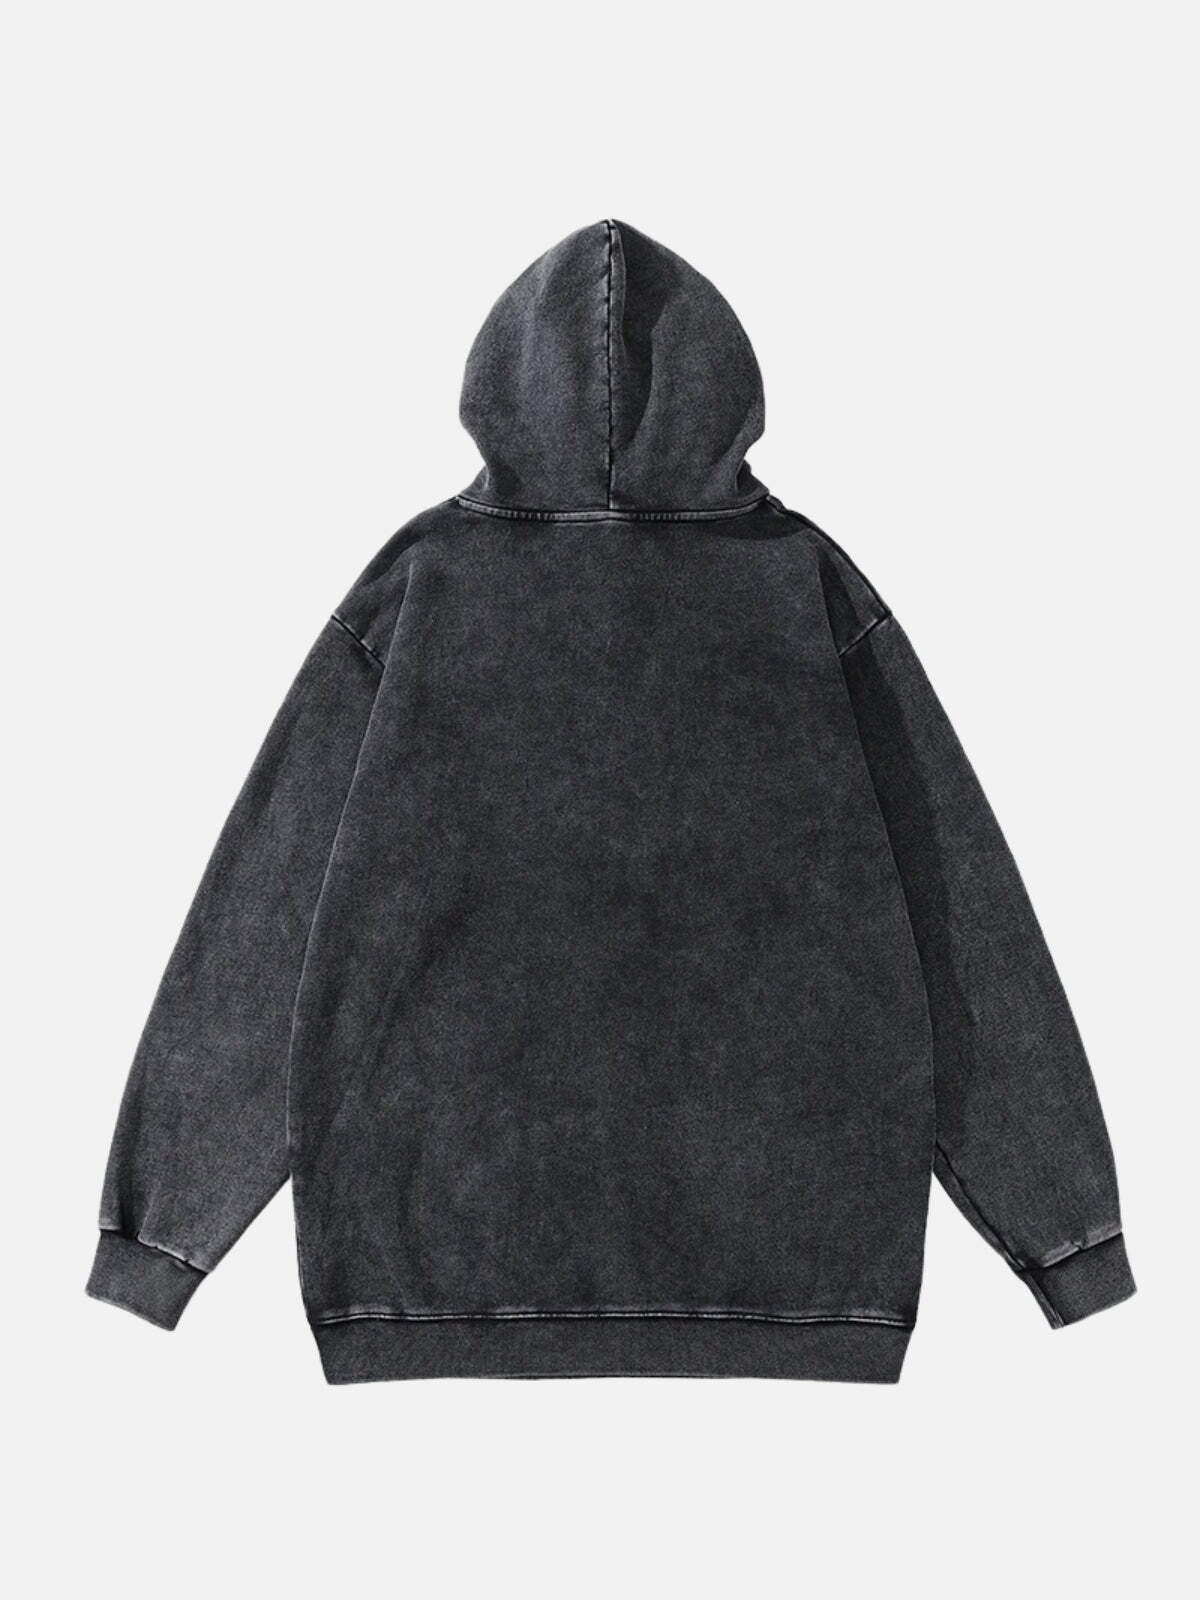 ironic bear hoodie edgy & playful streetwear 6112